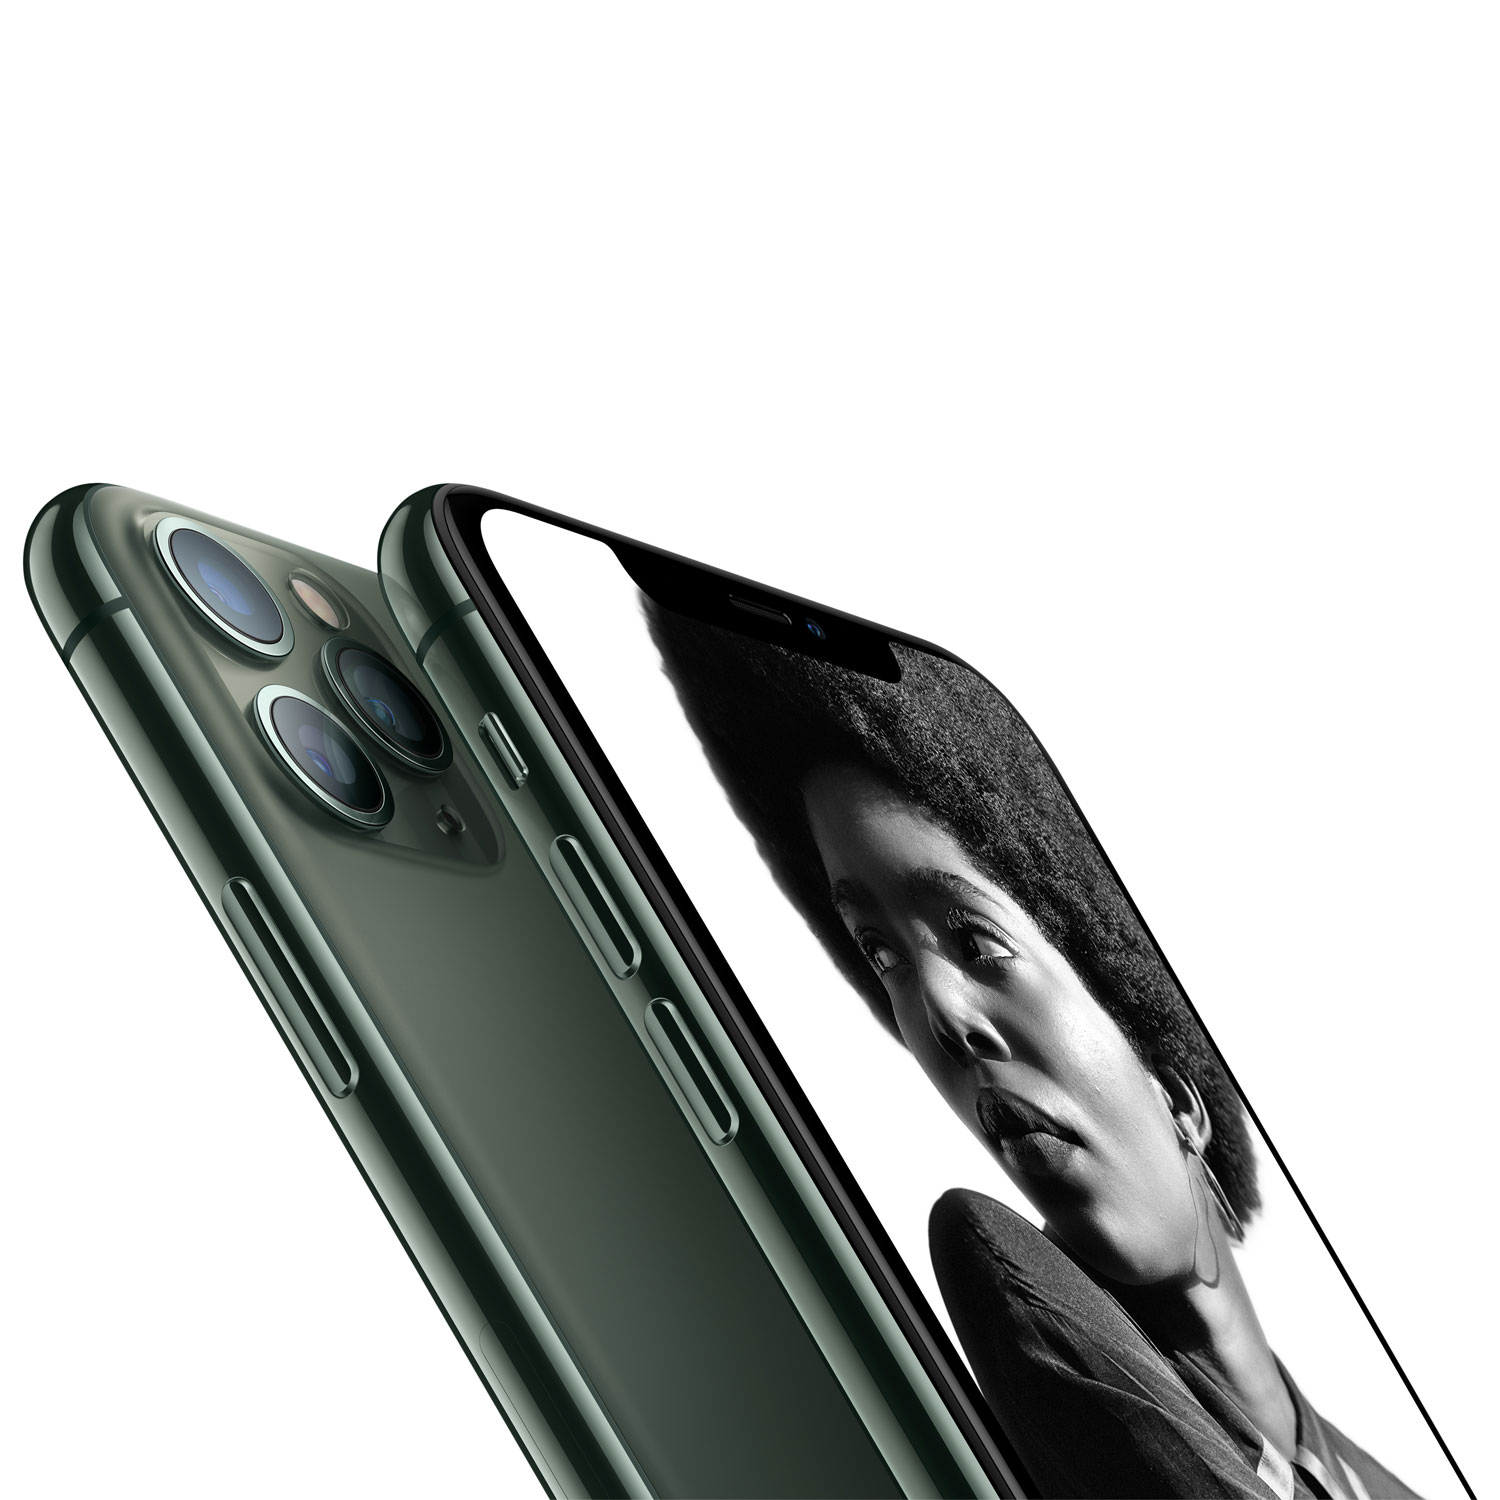 Apple iPhone 11 Pro Max 512GB - Midnight Green - Unlocked